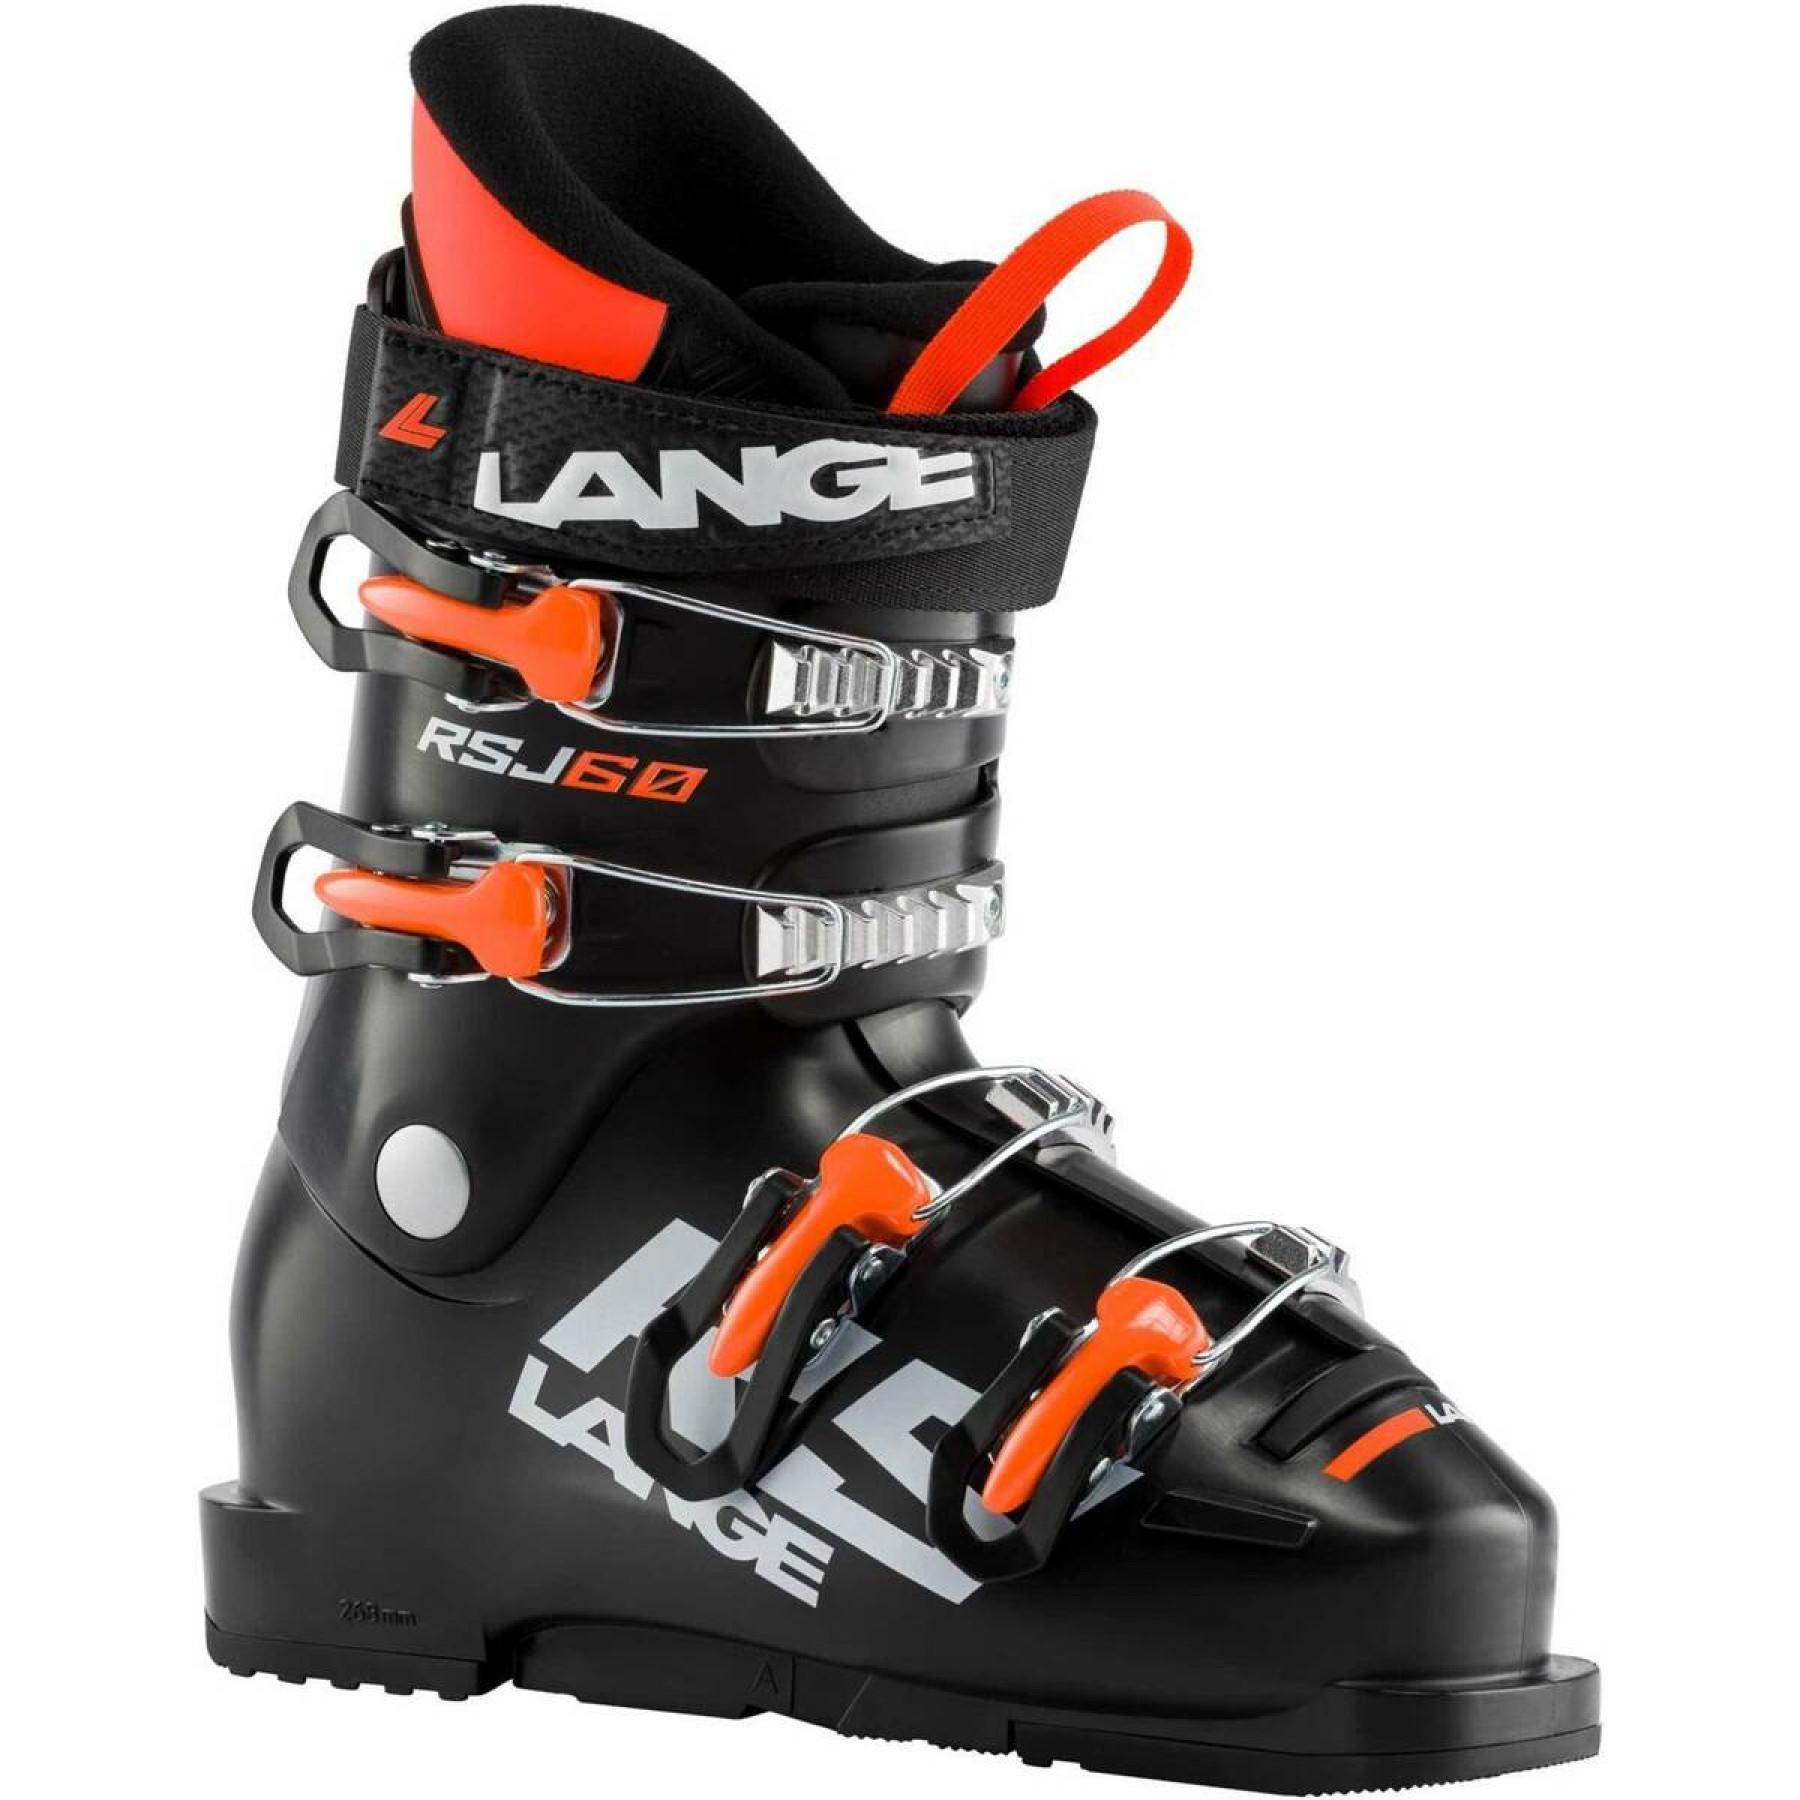 Chaussures de ski enfant Lange rsj 60